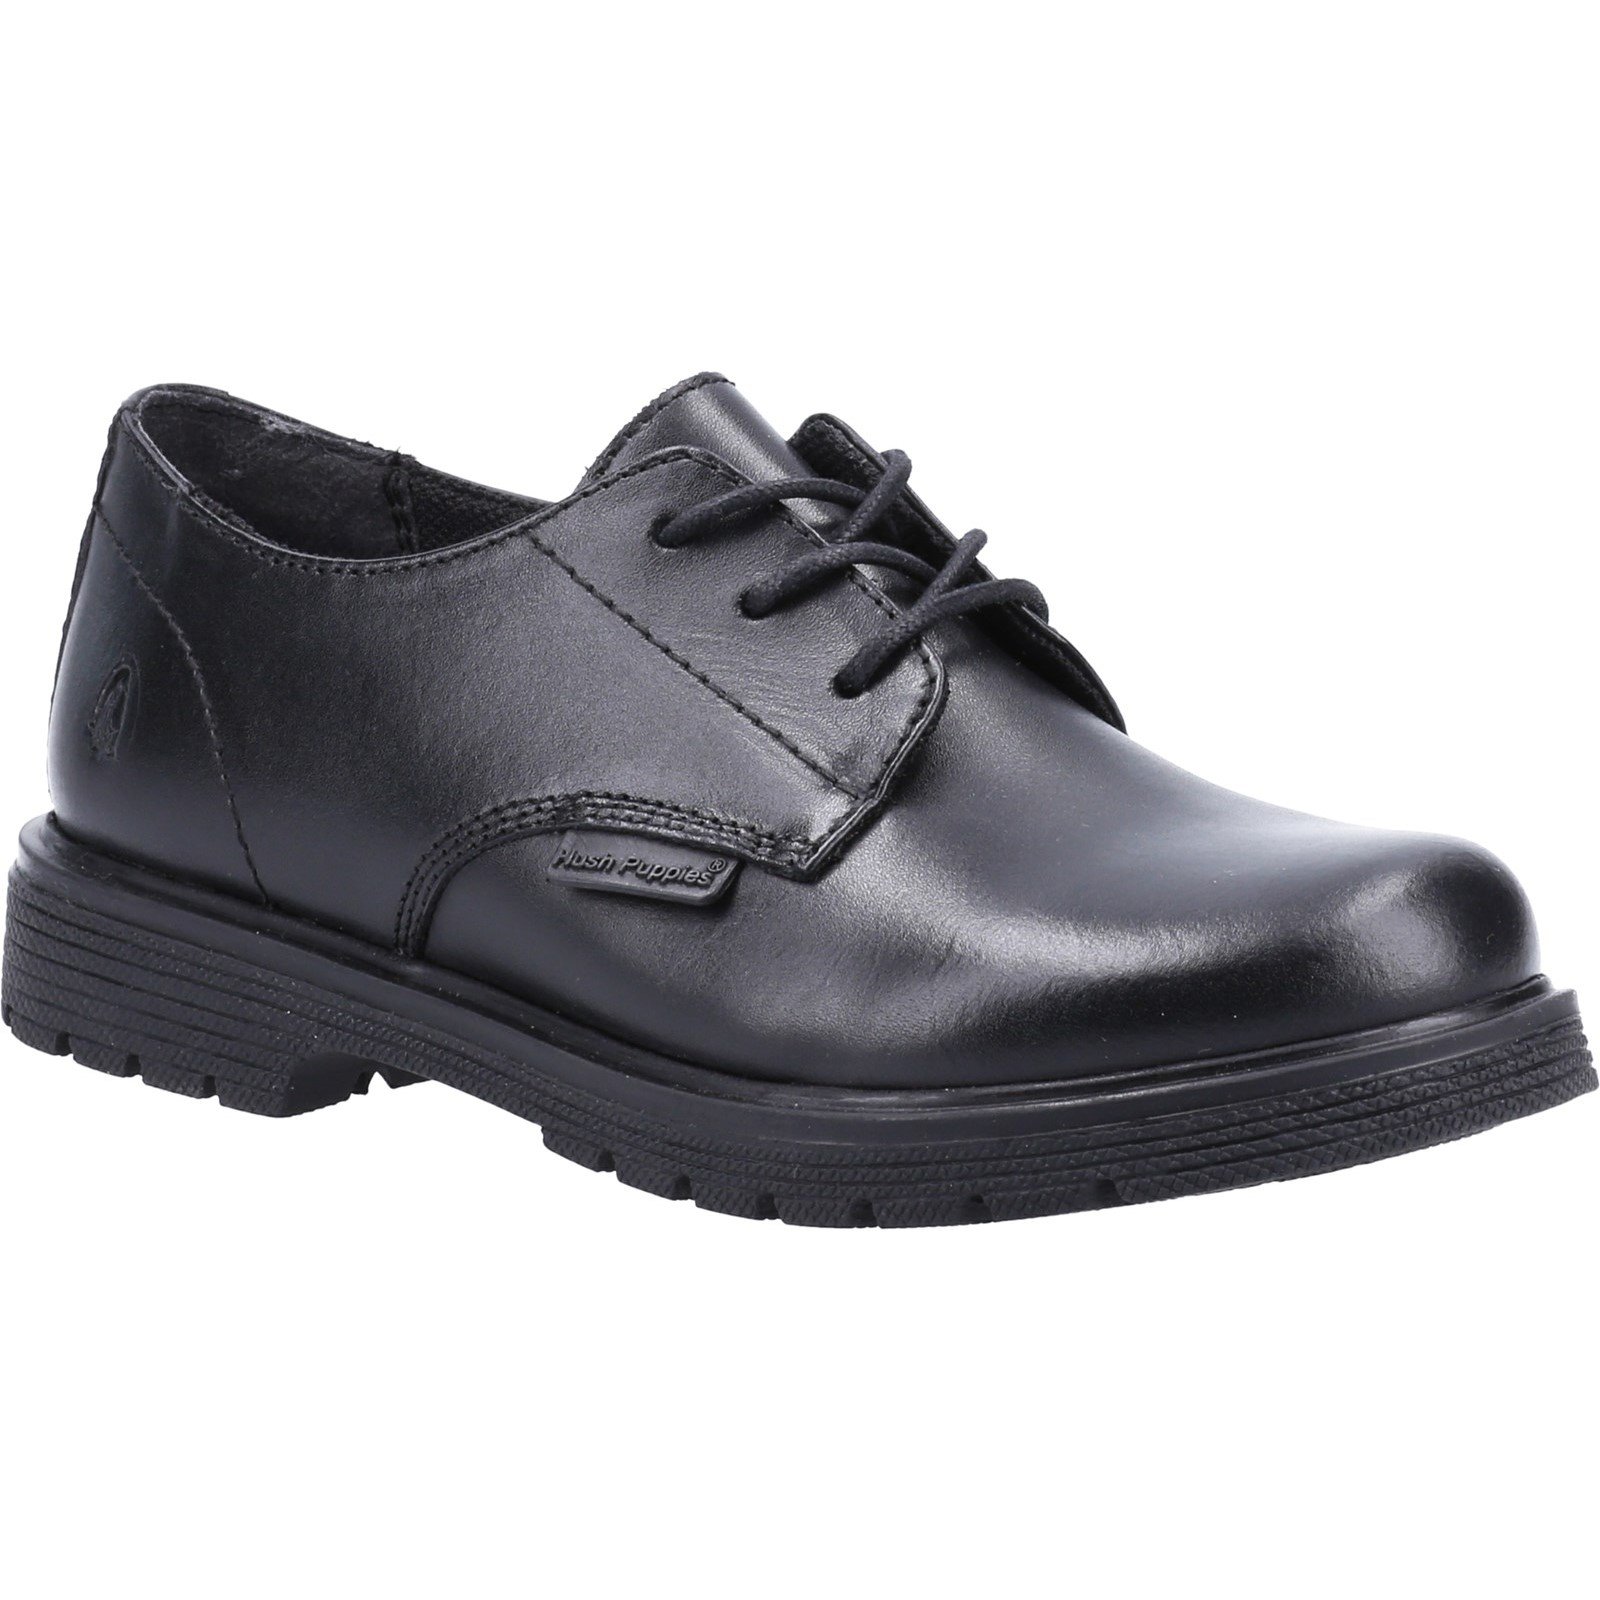 Hush Puppies Kid's Remi Junior School Derby Shoes Black 32612 - Black 2